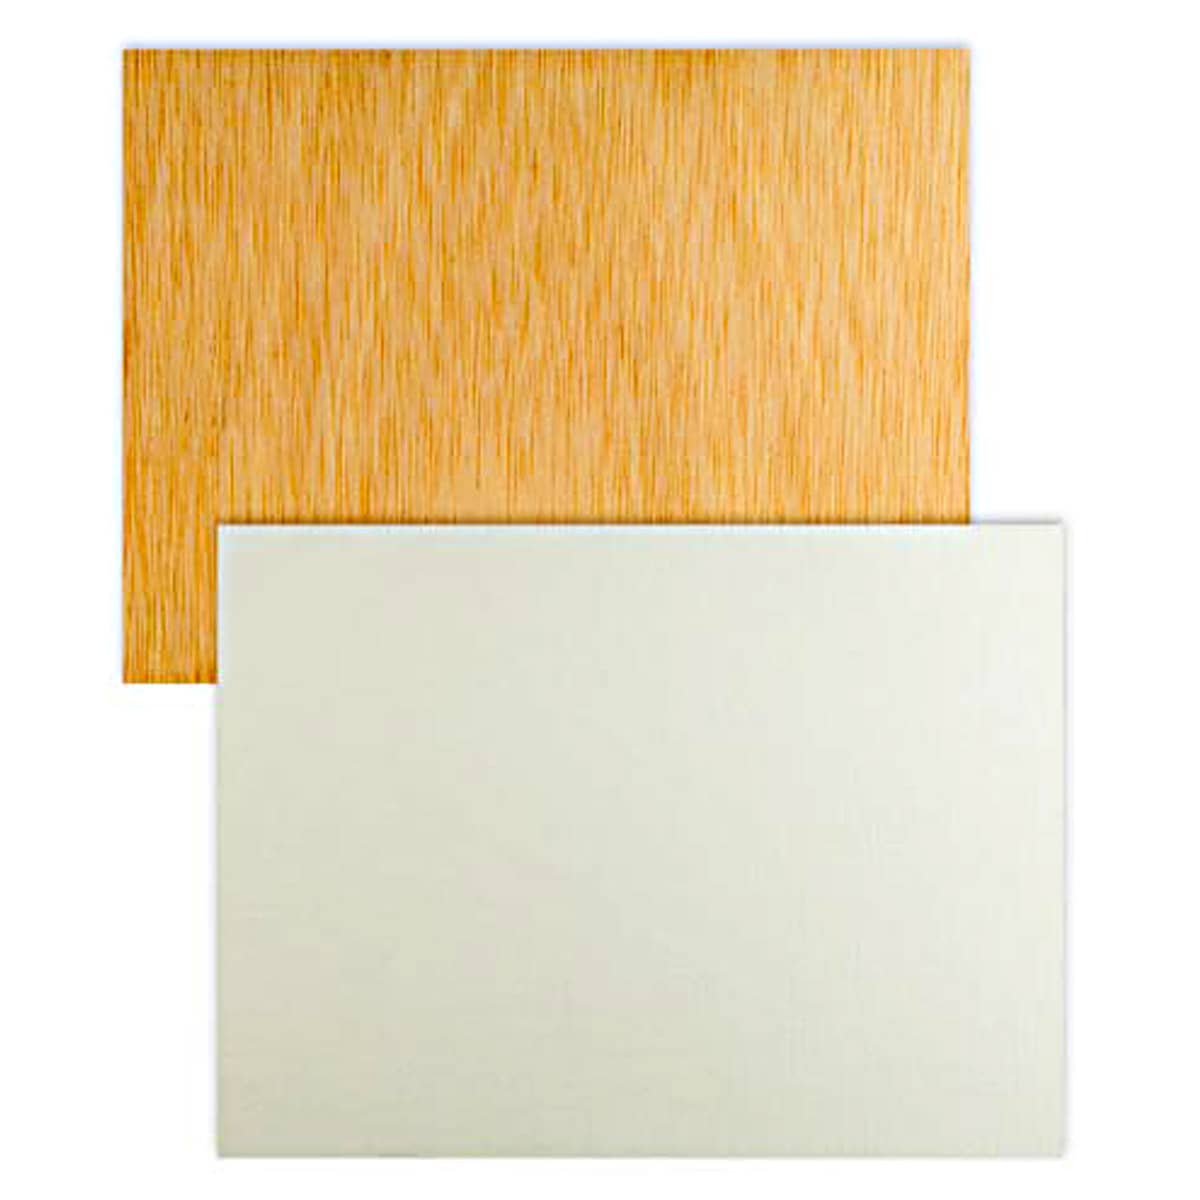 Raphael Premium Archival Oil Primed Linen Panel 16x20"